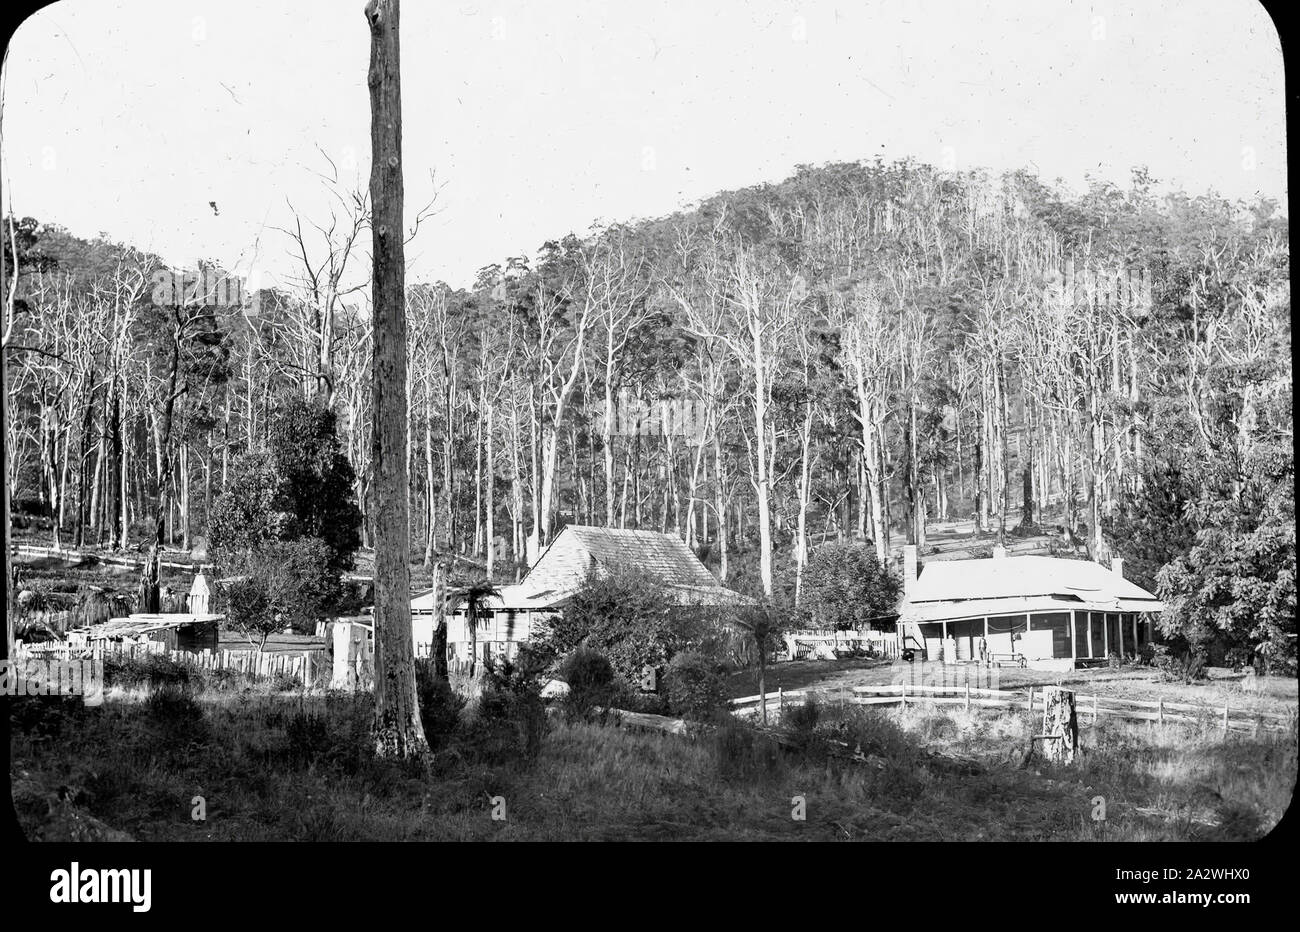 Lantern Slide - Hazel Dell Homestead, Australia, Date Unknown, Black and white image of an early Australian homestead in the bush Stock Photo